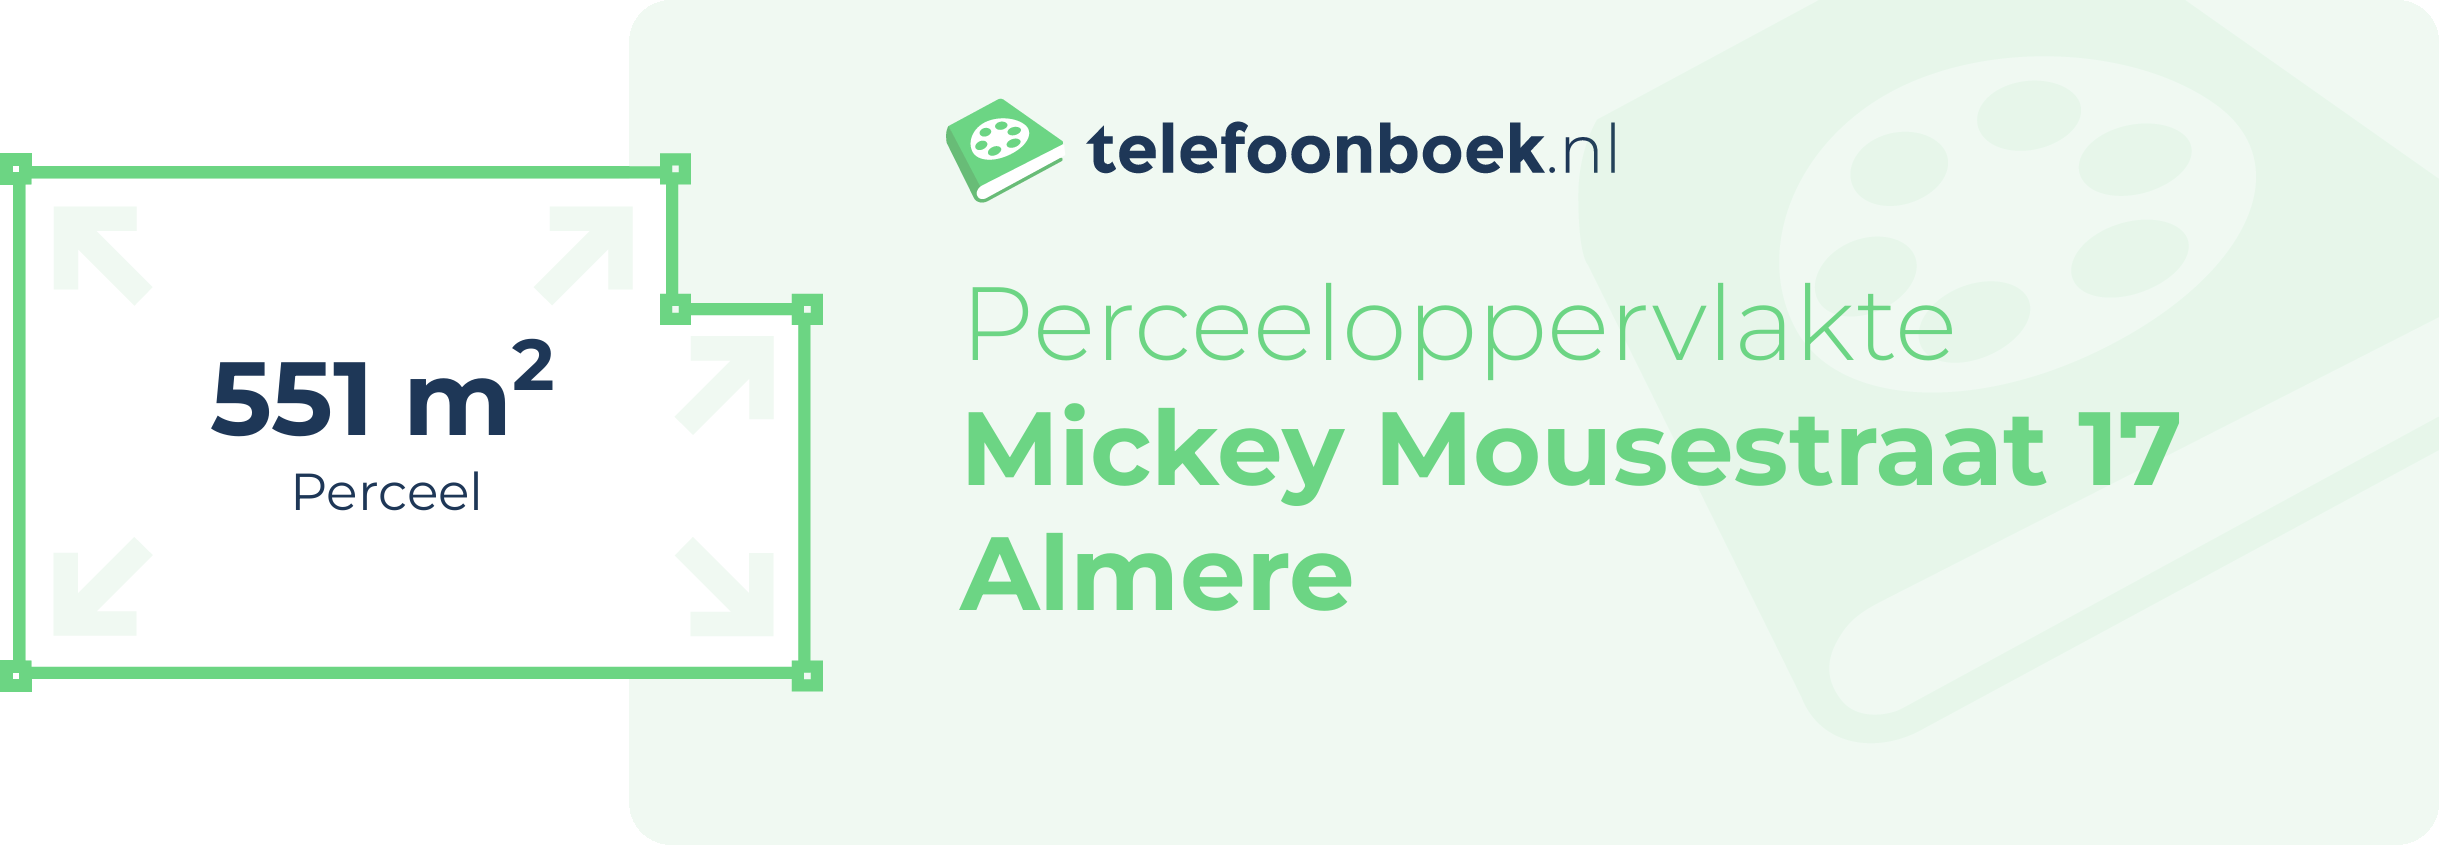 Perceeloppervlakte Mickey Mousestraat 17 Almere